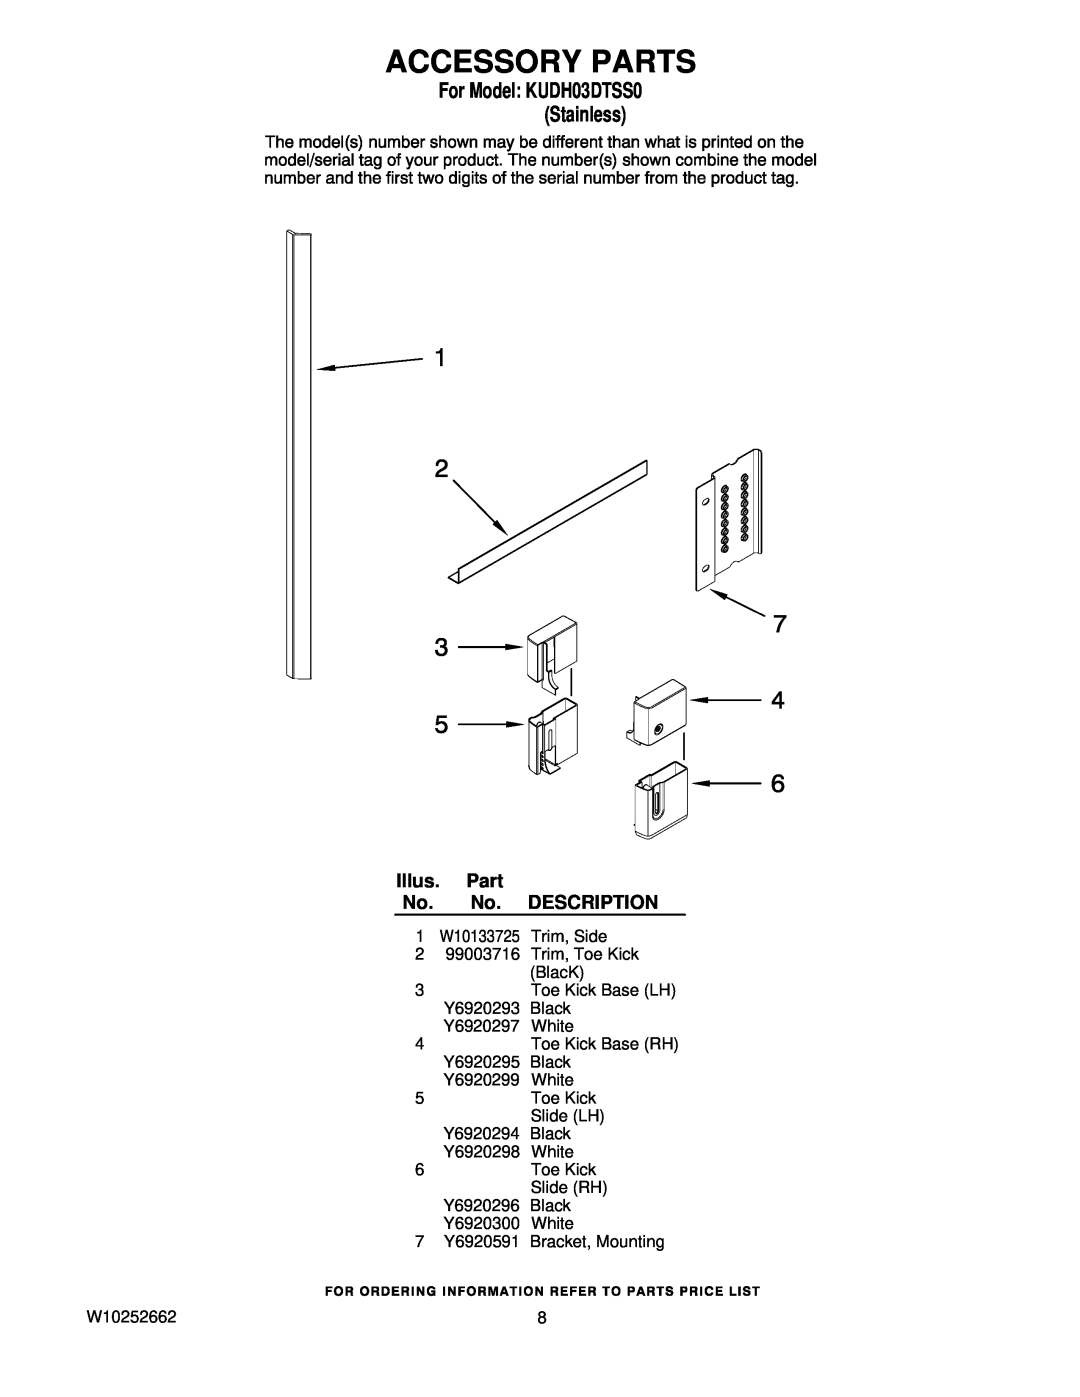 KitchenAid manual Accessory Parts, Illus. Part No. No. DESCRIPTION, For Model KUDH03DTSS0 Stainless 